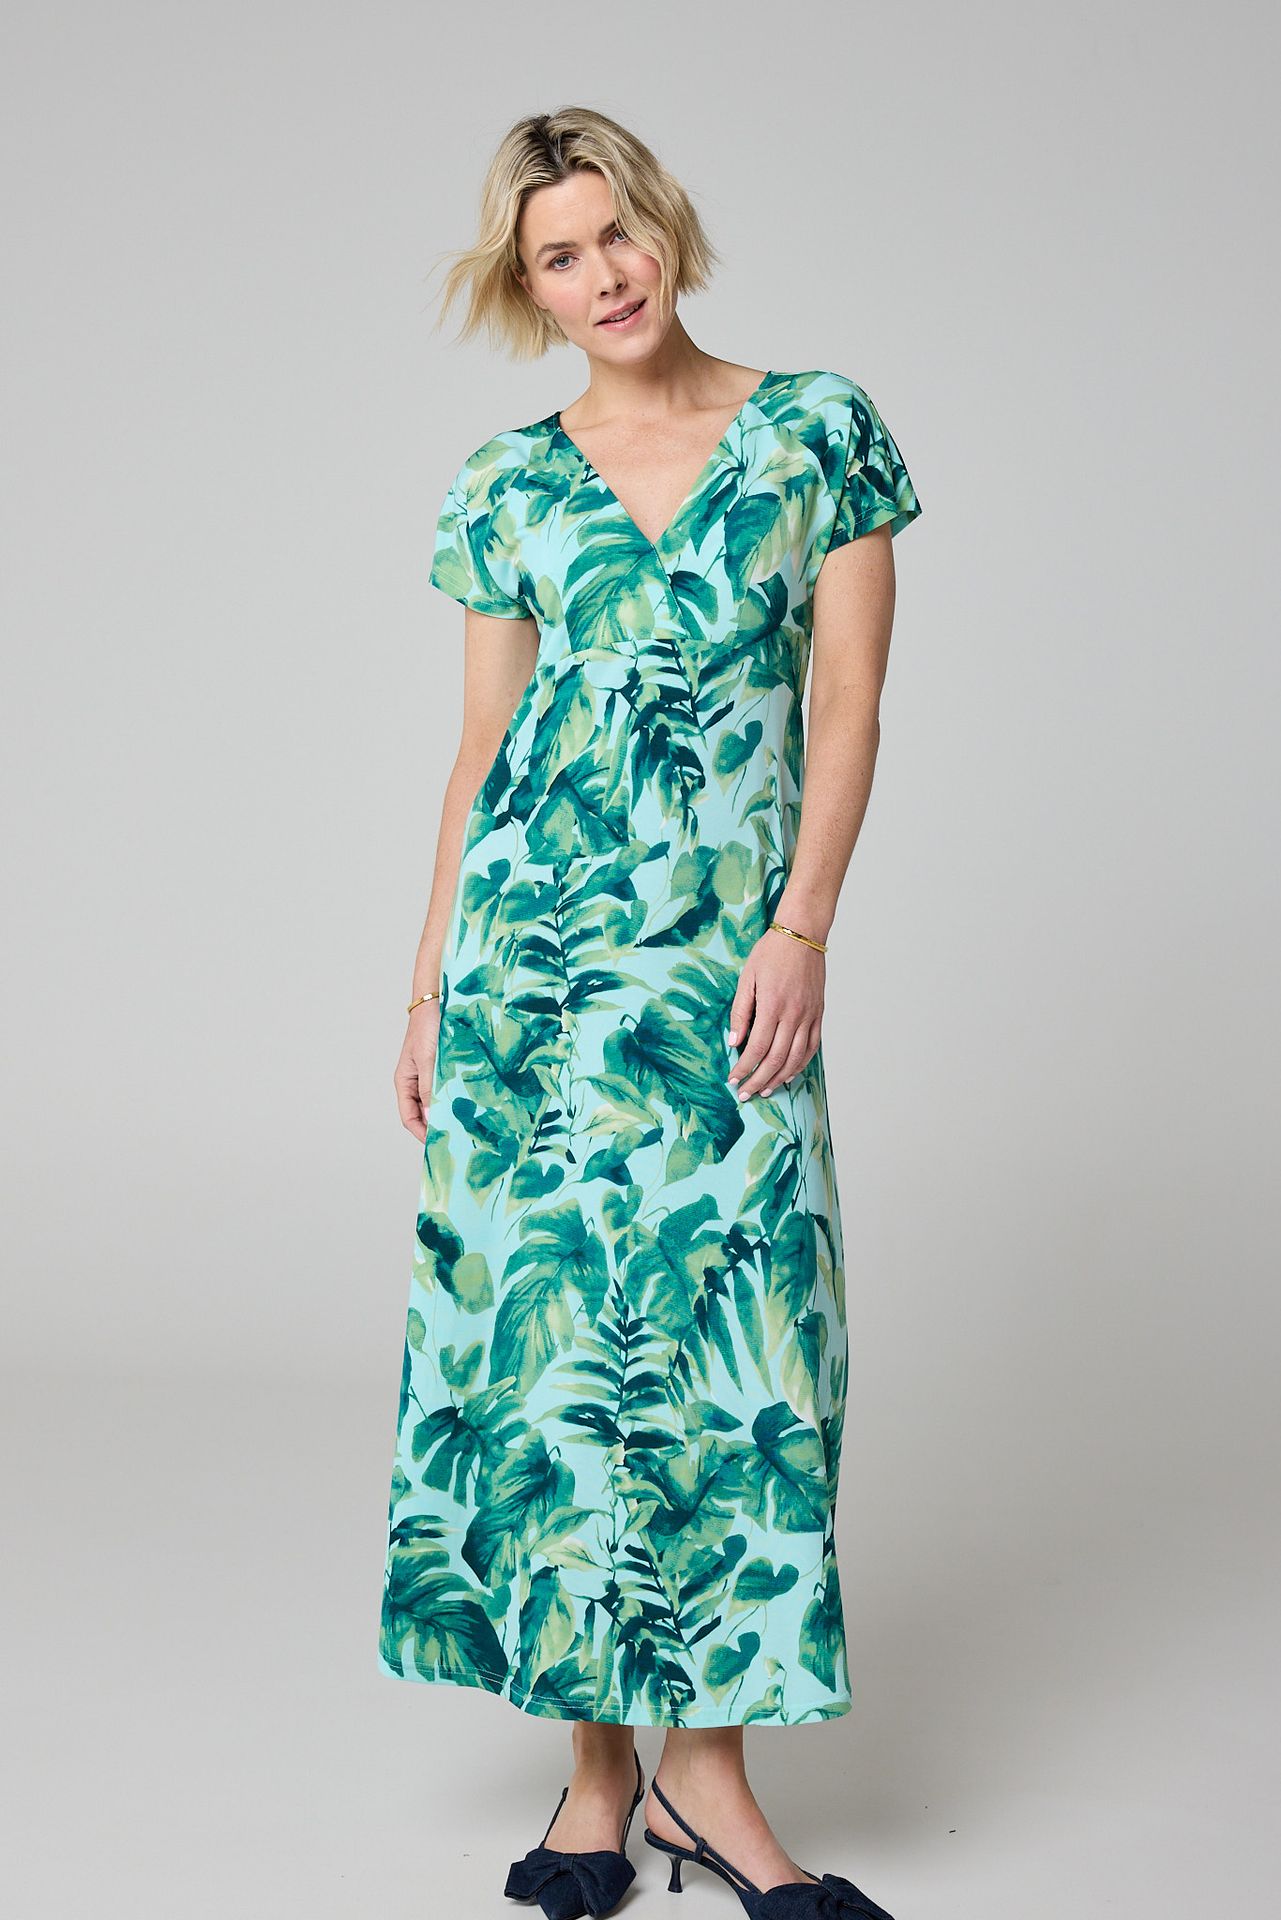  Maxi jurk botanisch mint multicolor 213841-513-48